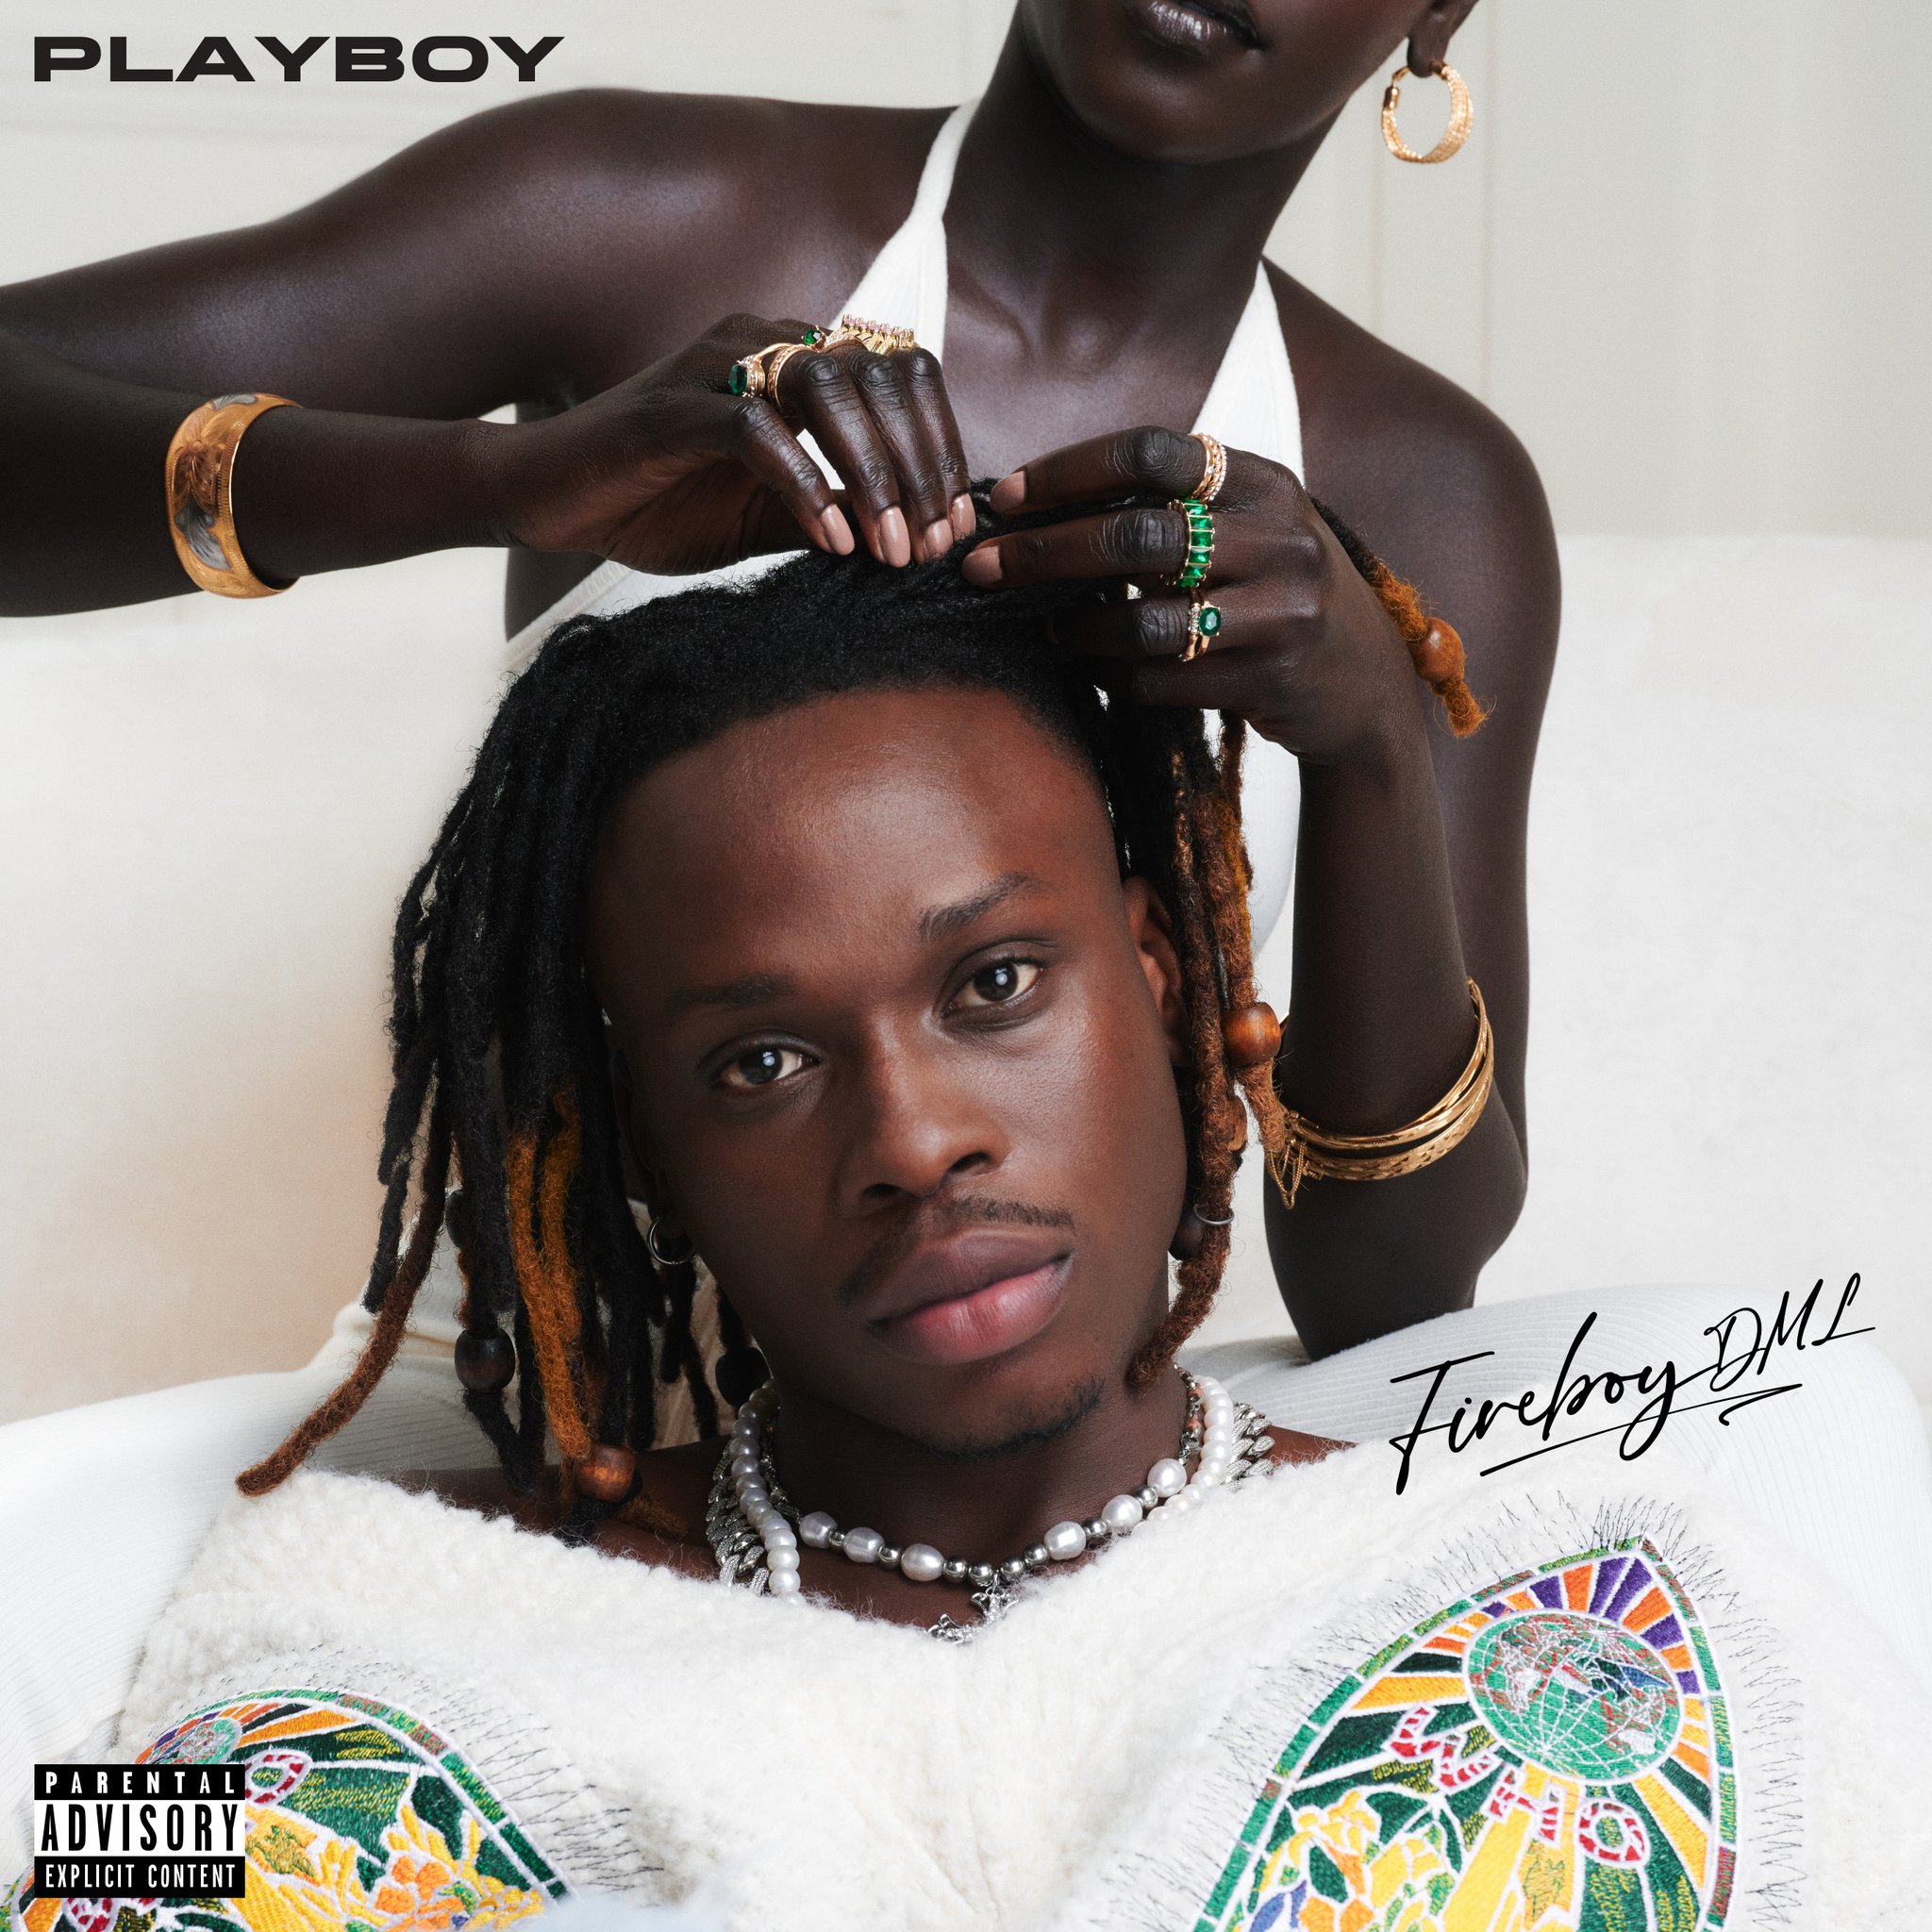 Fireboy releases new album ‘Playboy’